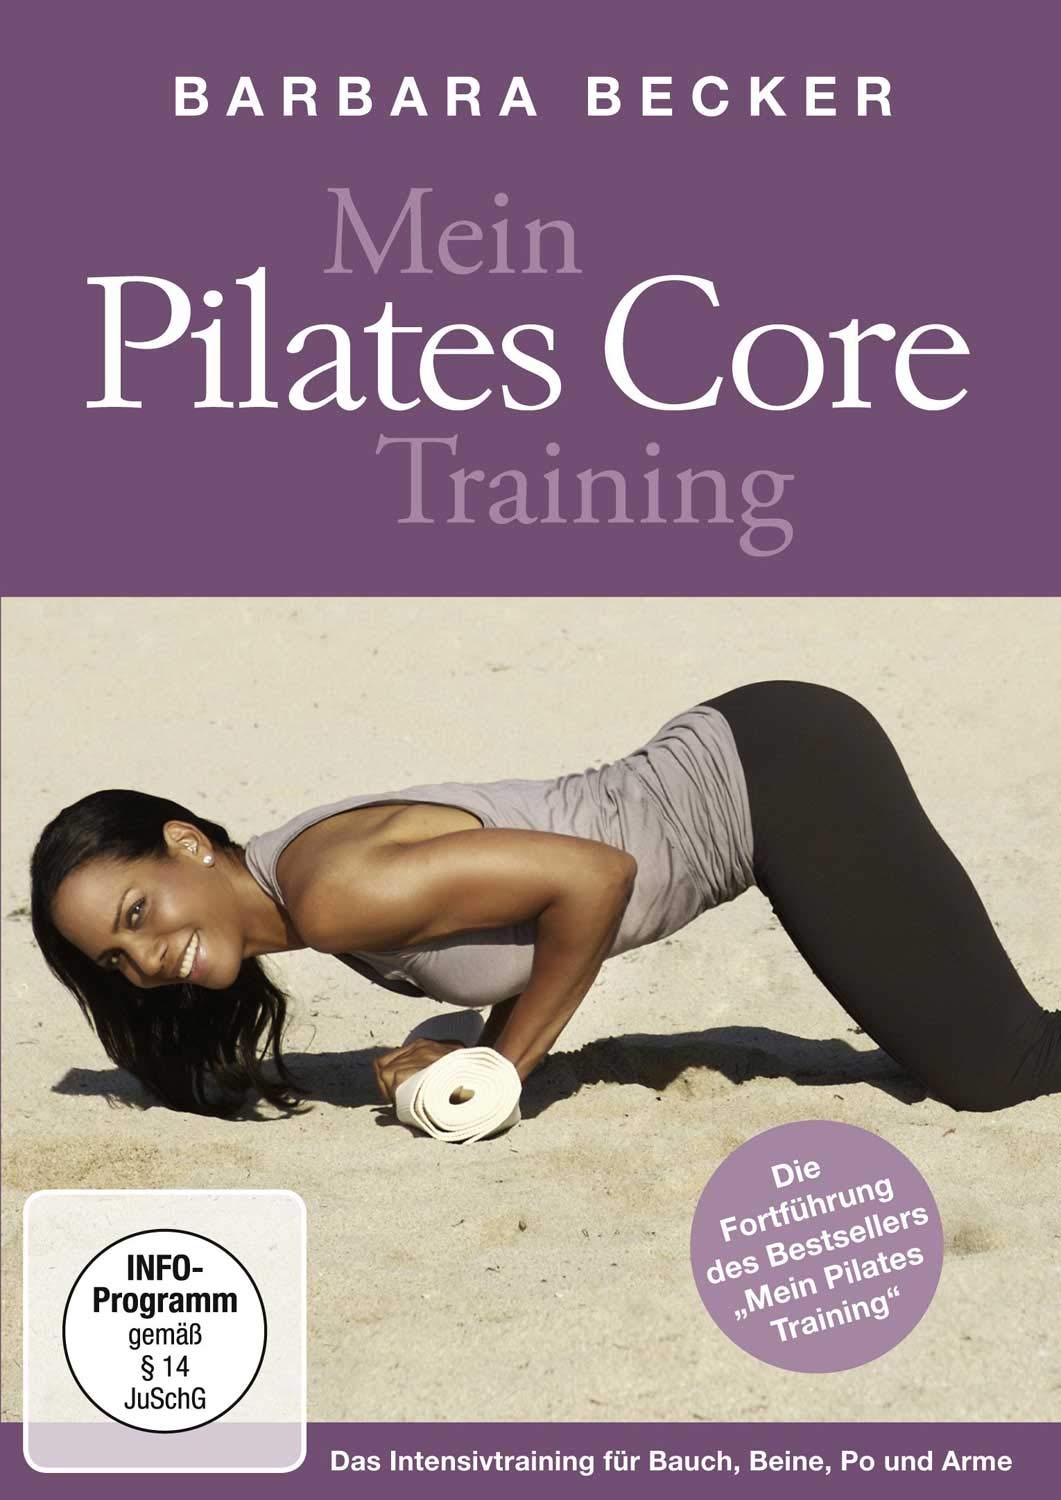 Barbara Becker - Mein Pilates Core Training (Neu differenzbesteuert)